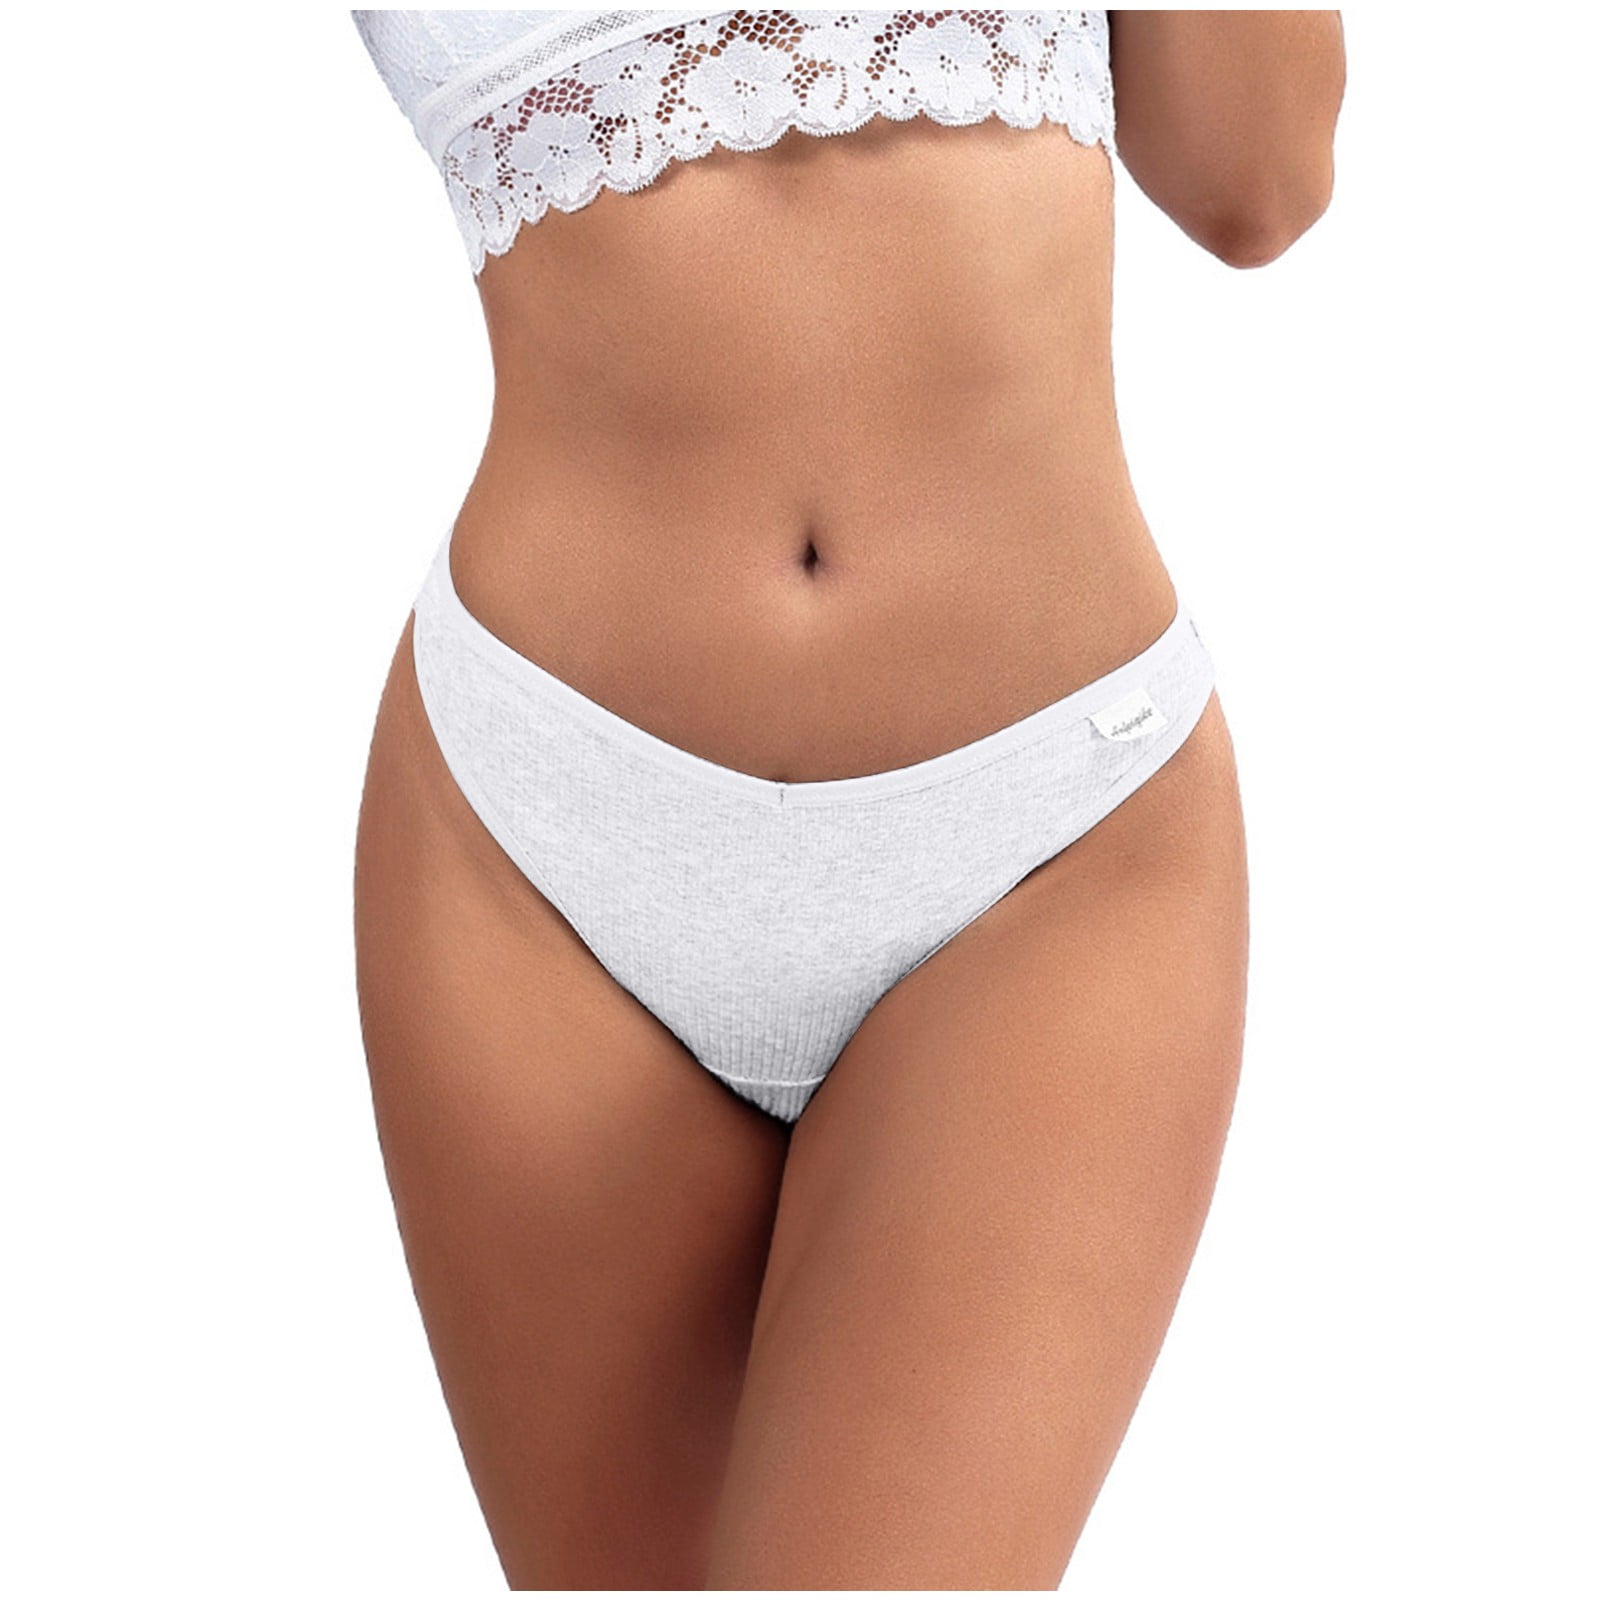 Knosfe Cute Panties for Teen Girls Seamless T-Back Cotton Low Waisted  Womens Plus Size Underwear Bikini White S 